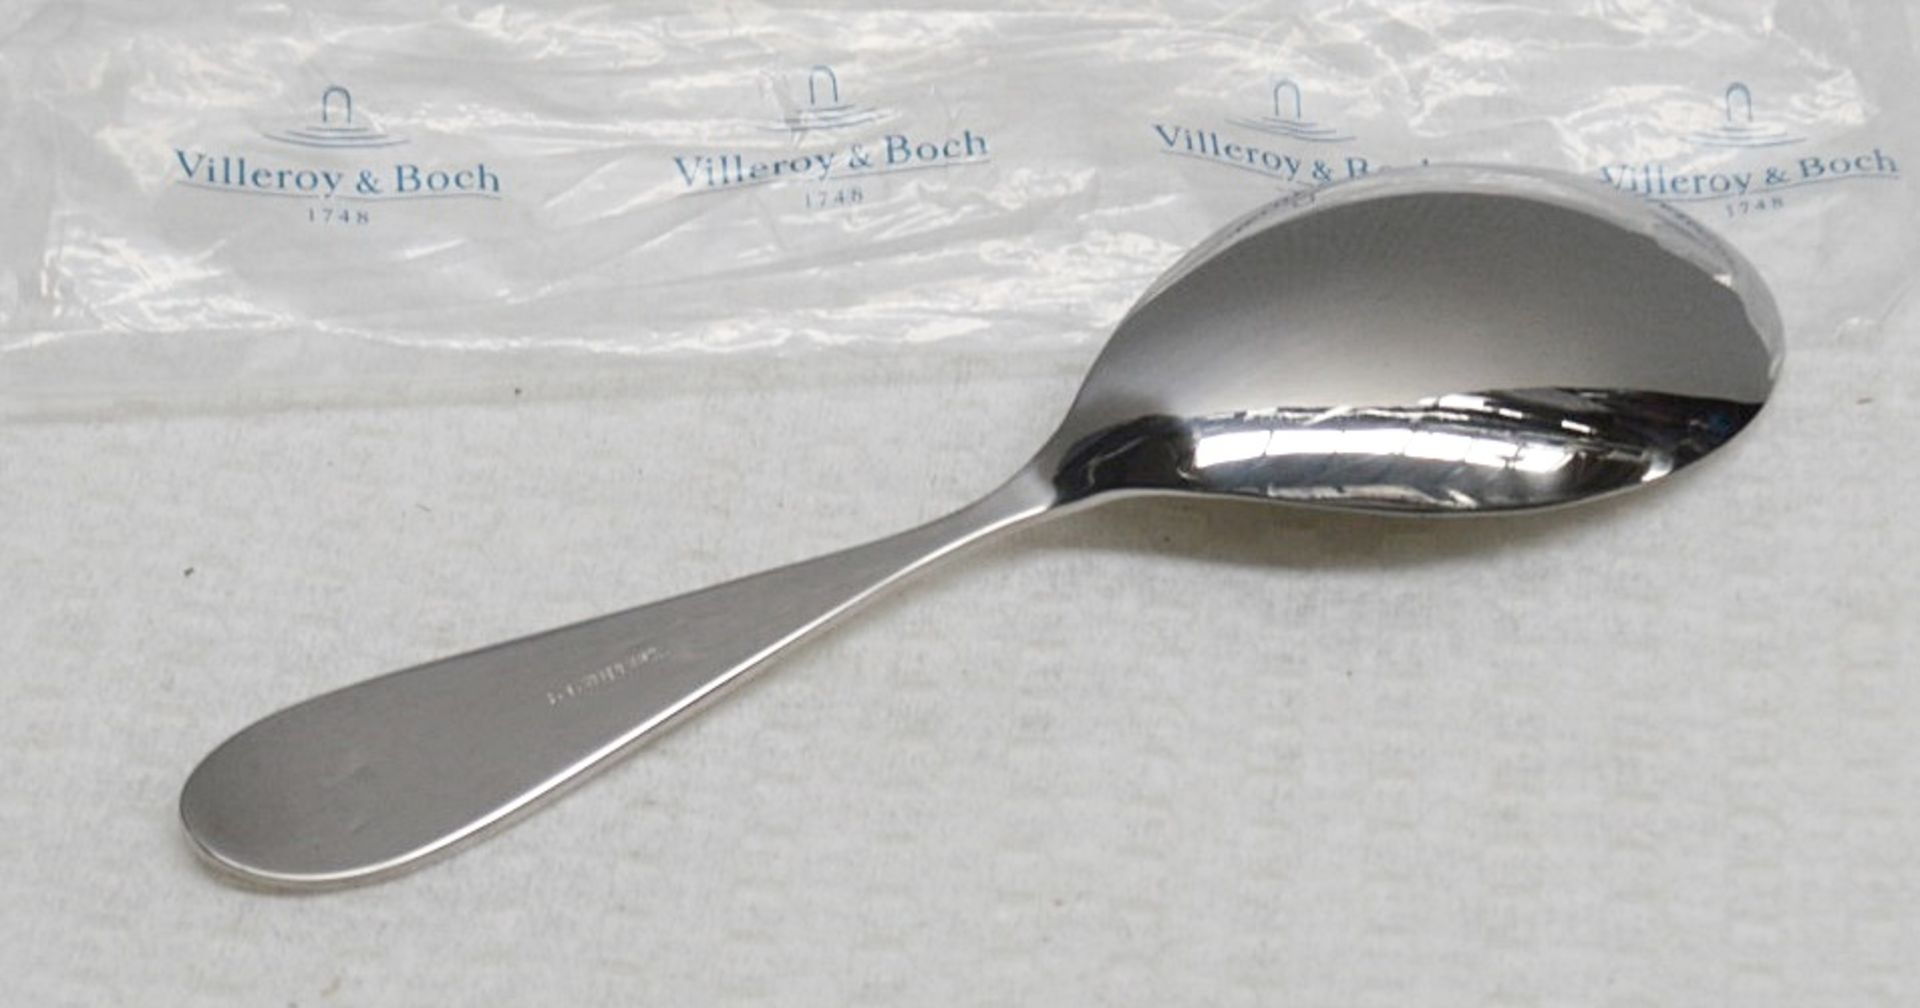 1 x Villeroy&Boch Rice Spoon - Ref: HHW73/JUL21 - CL011 - Location: Altrincham WA14 Condition - Image 2 of 5